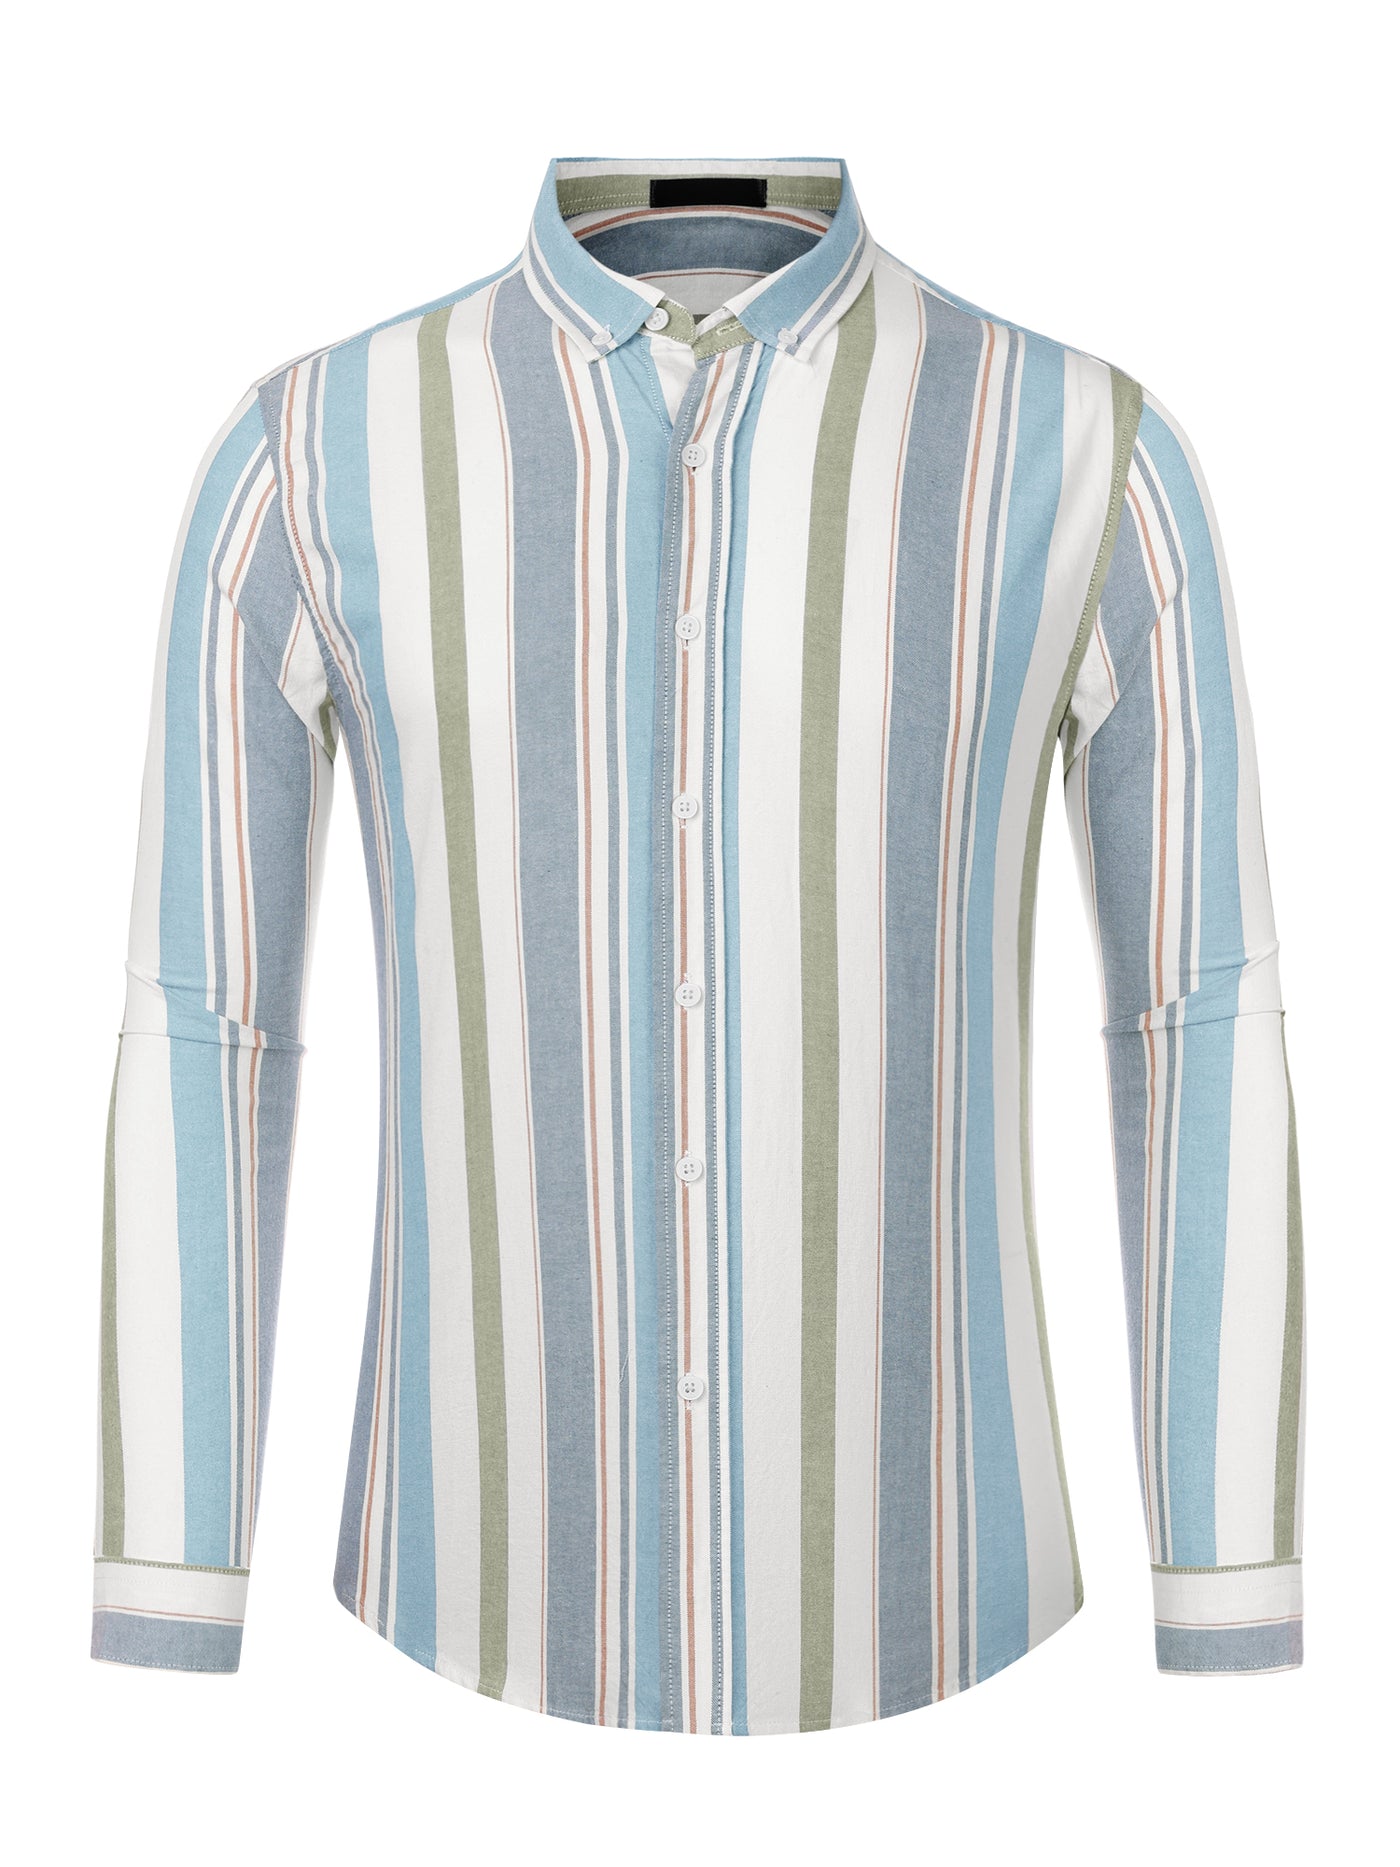 Bublédon Stripe Long Sleeves Button Down Color Block Dress Shirt